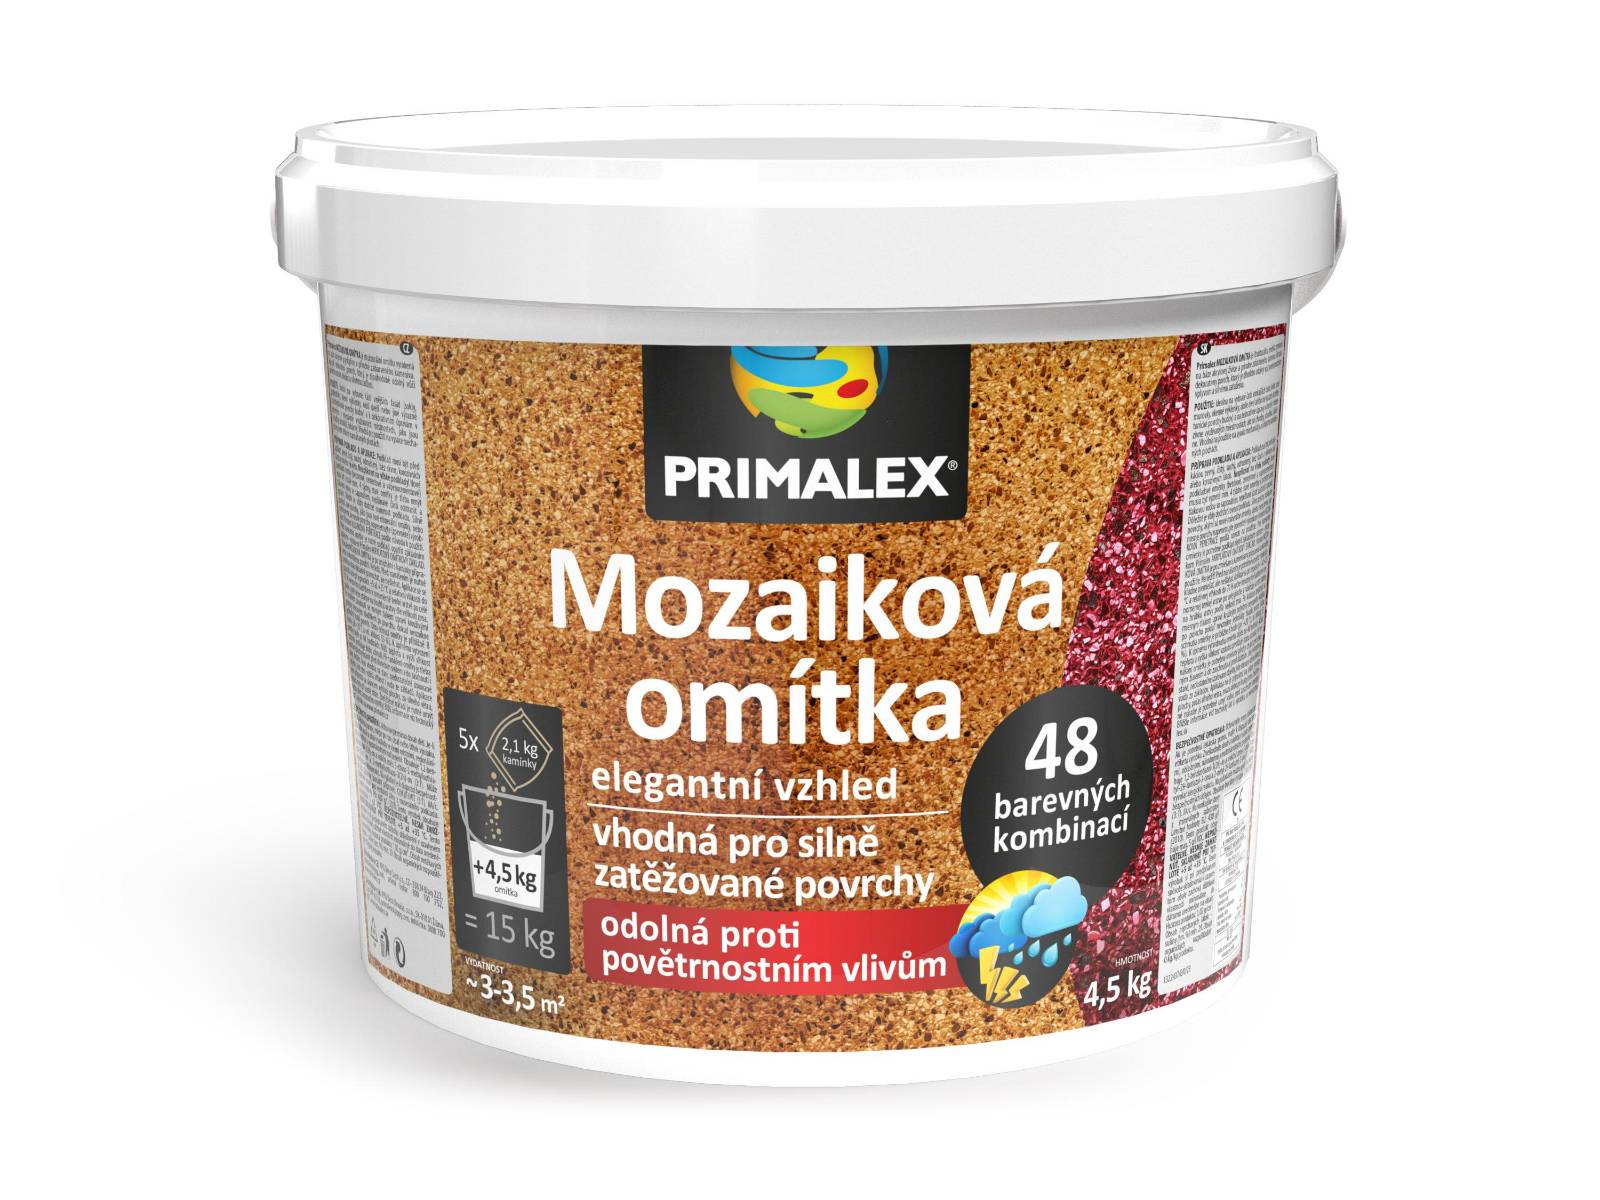 PRIMALEX Mozaiková omietka 15kg (4.5 kg spojivo + 5 x 2.1kg kameniva) mix farieb H+H+H+H+J